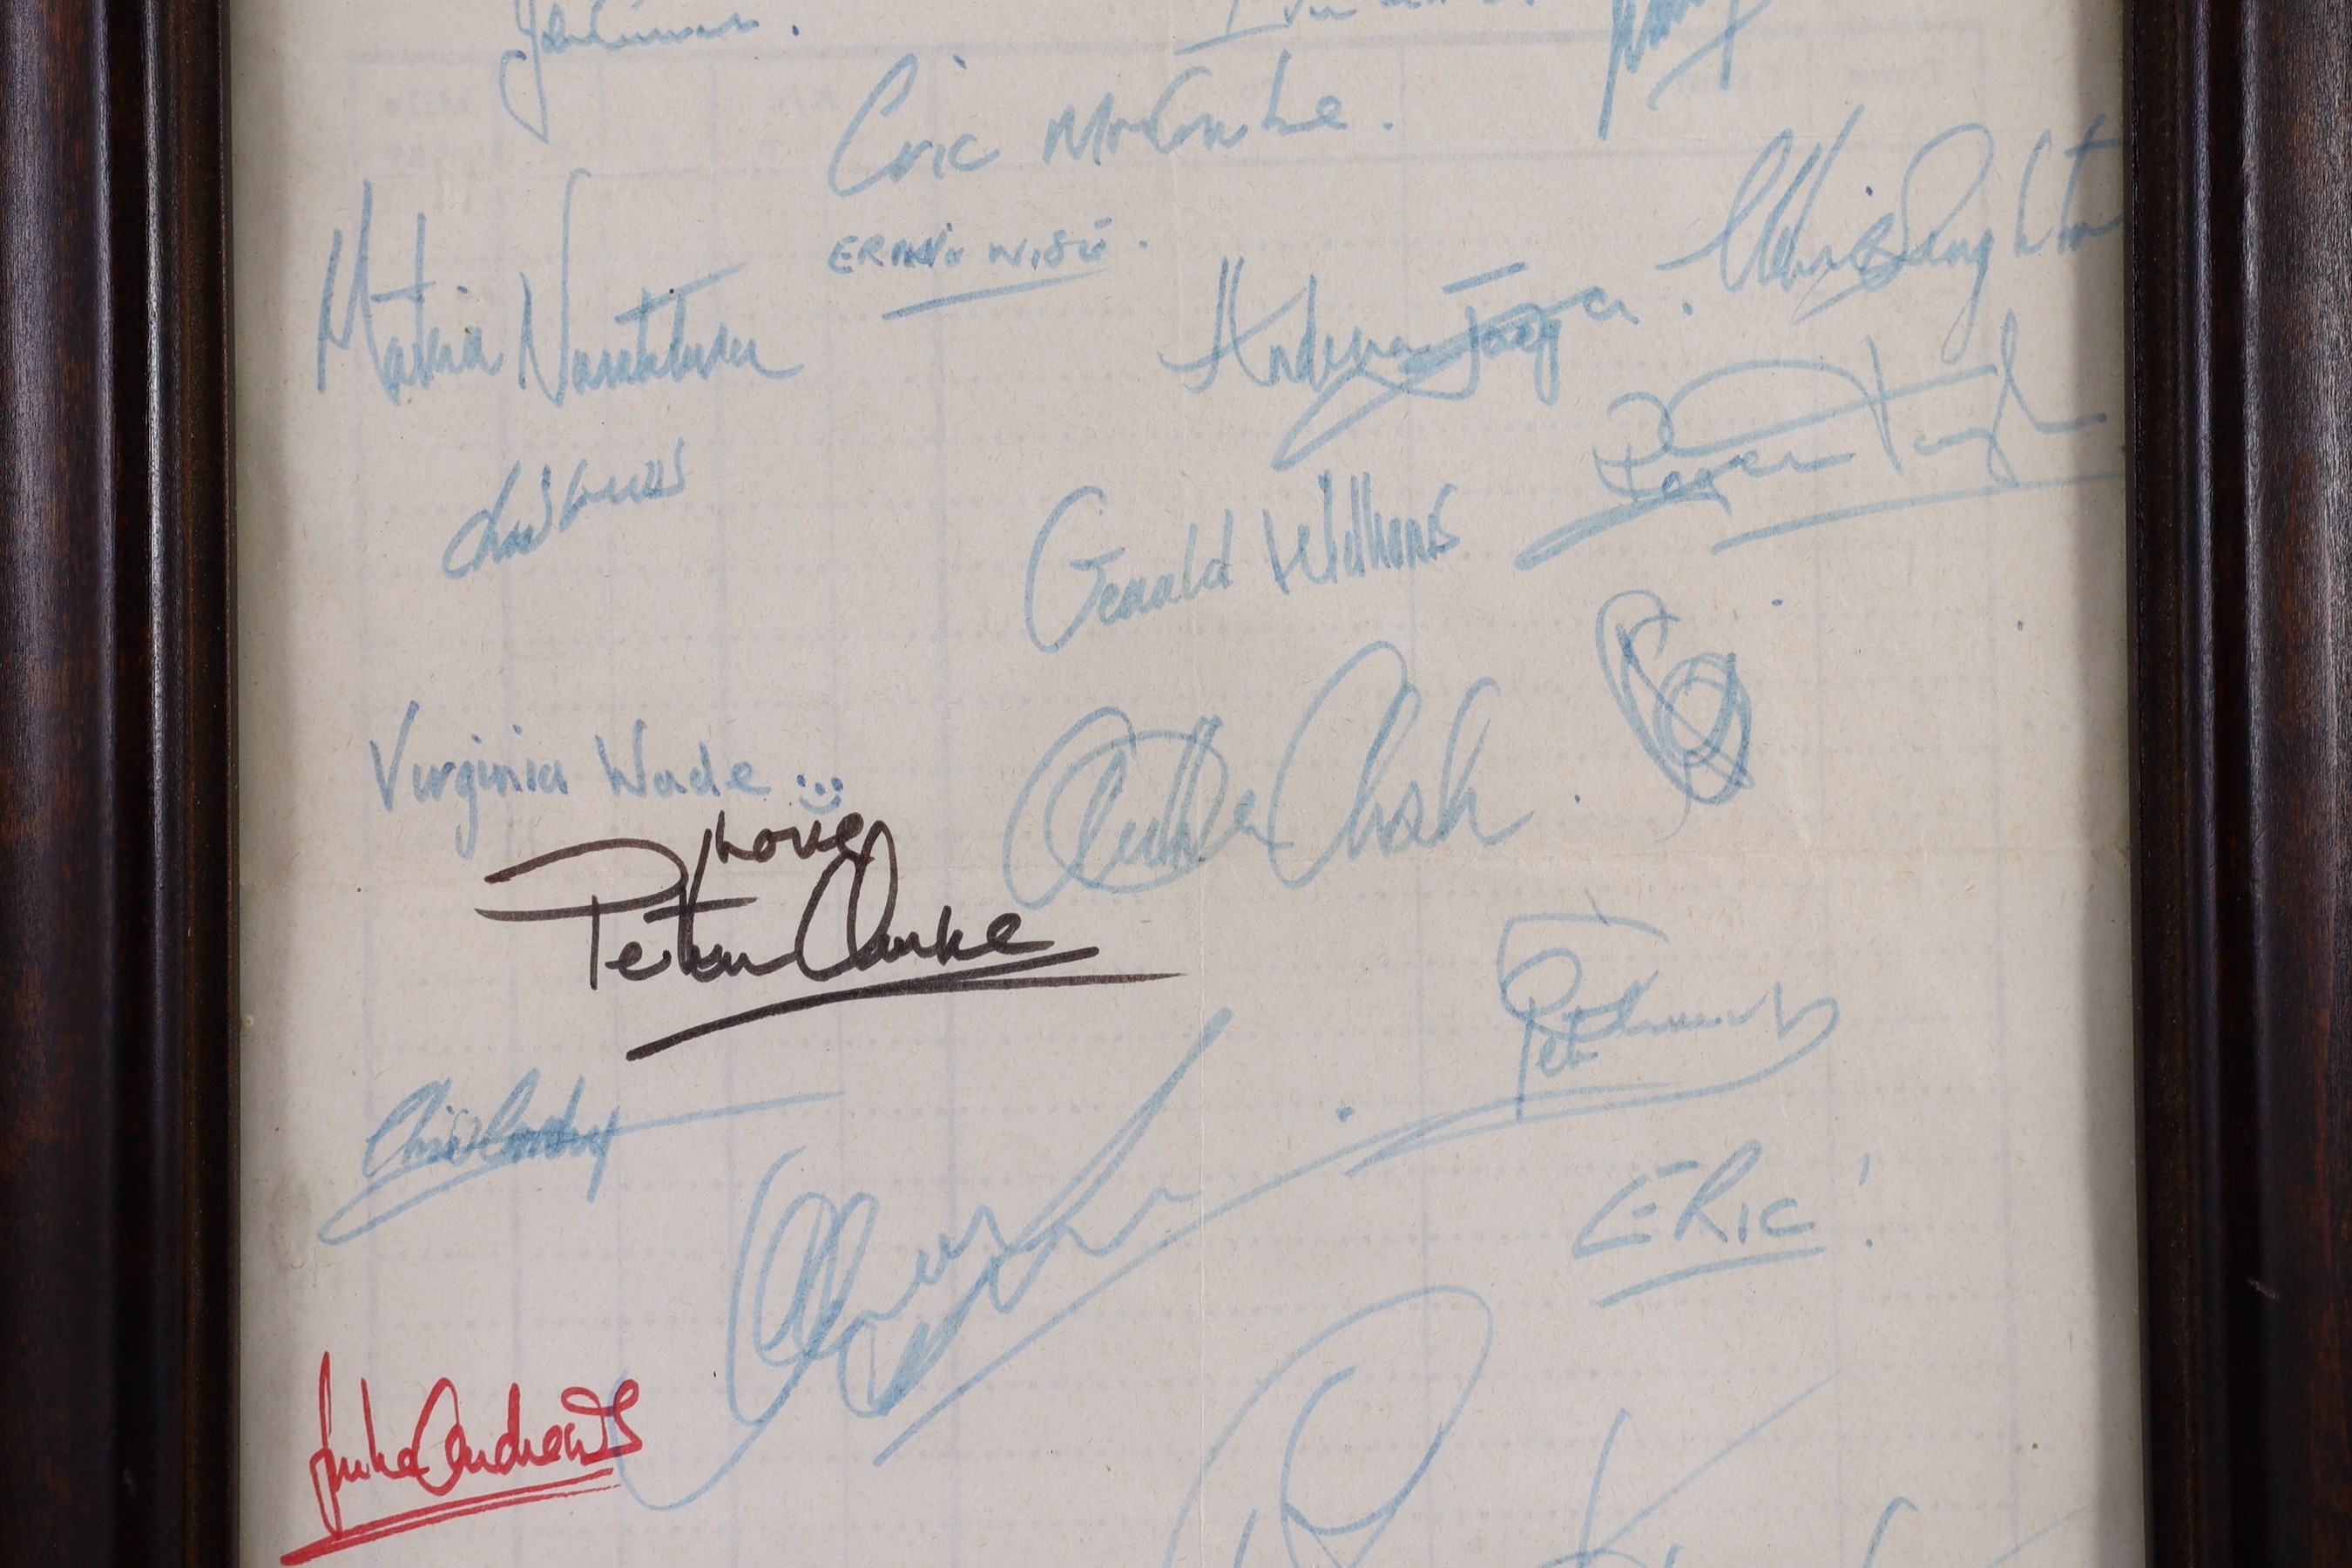 Framed autographs including Virginia Wade, Terry Wogan, Ernie Wise, Eric Morecambe John McEnroe, Julie Andrews etc., 20 cms wide x 28.5 cms high